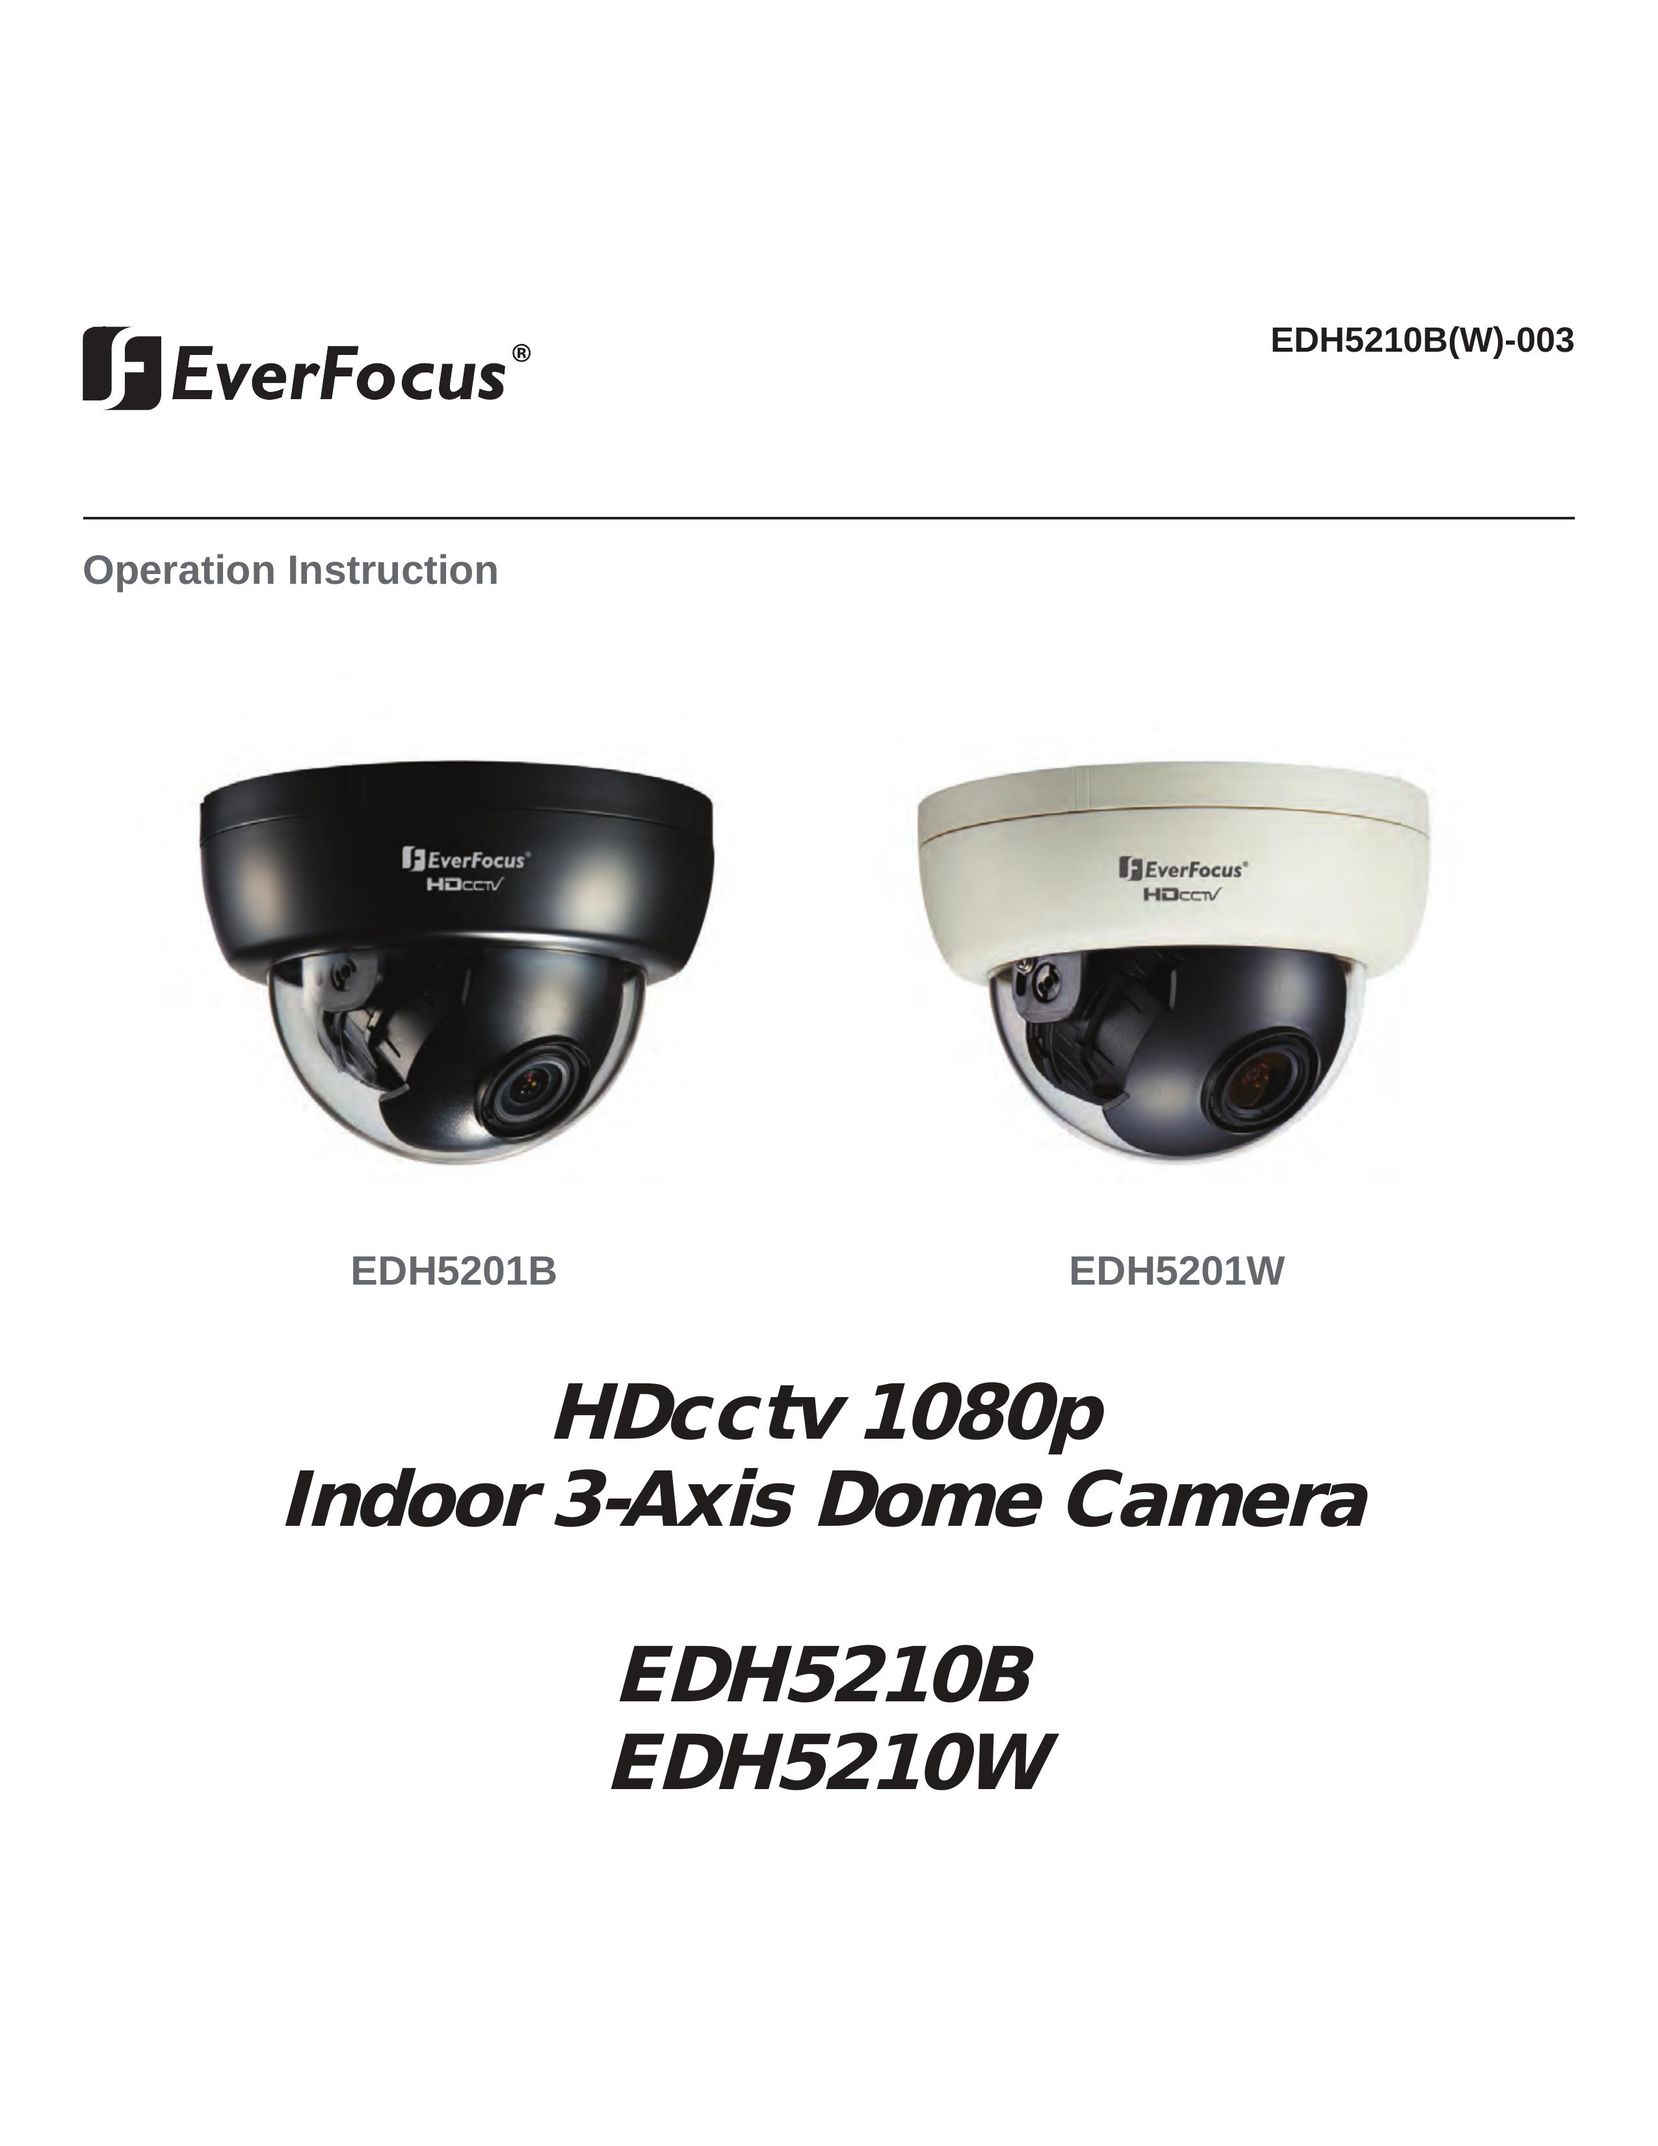 EverFocus EDH5210B Home Security System User Manual